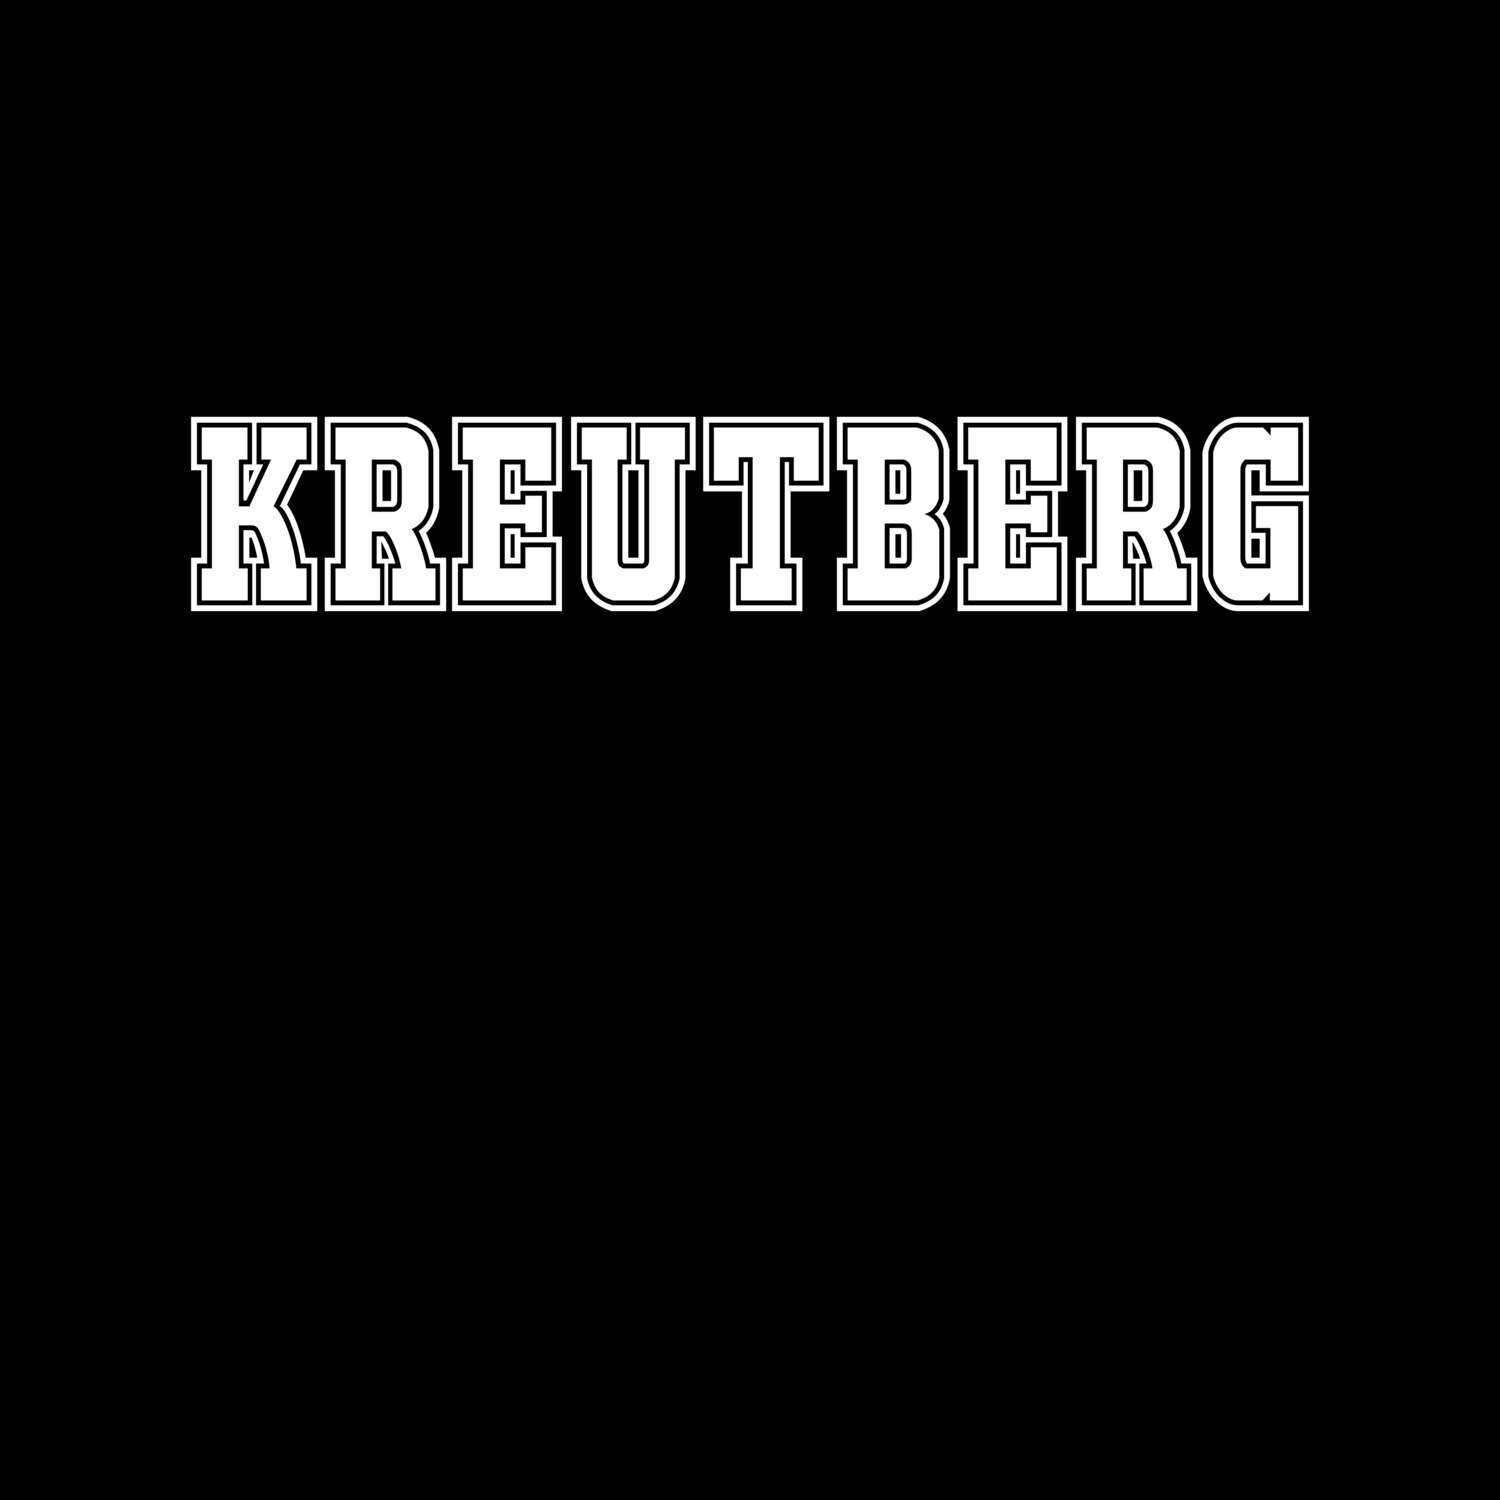 Kreutberg T-Shirt »Classic«